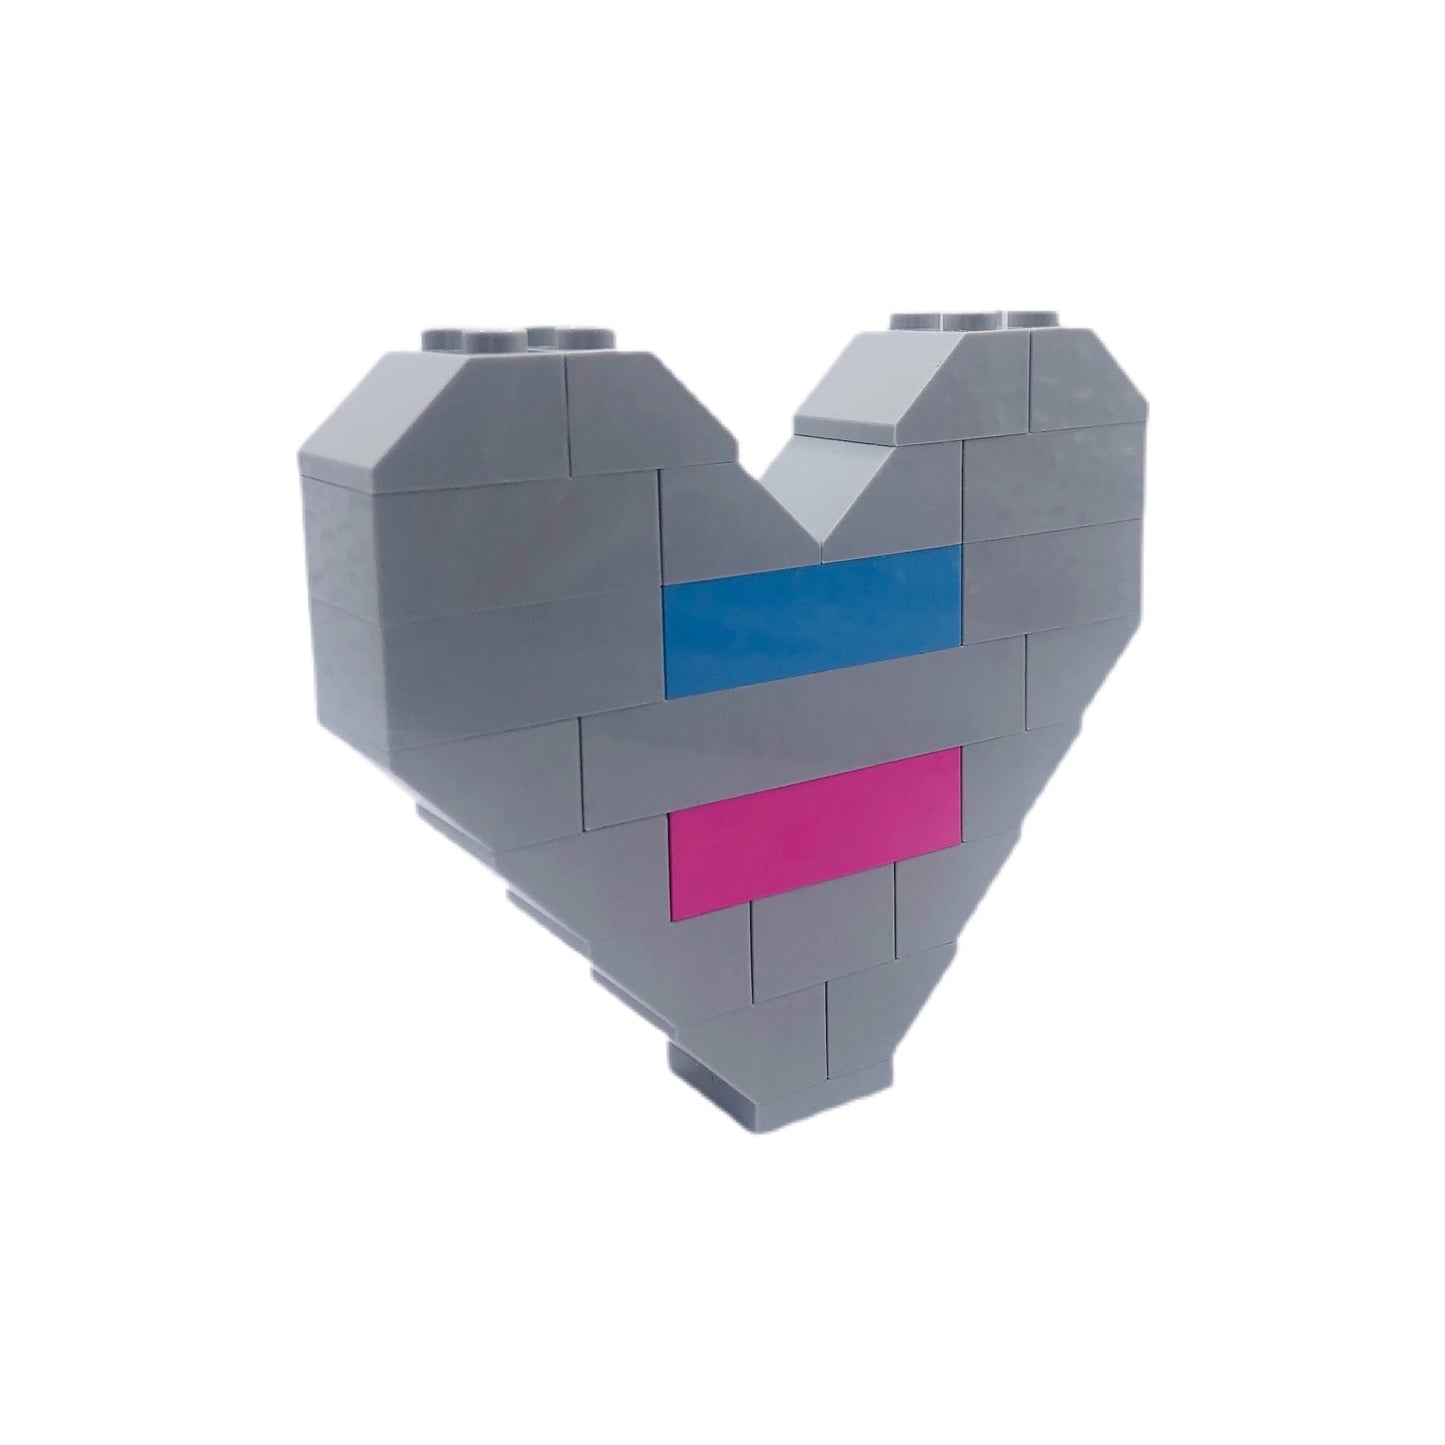 BrickNetty Pride Heart - Androgynous